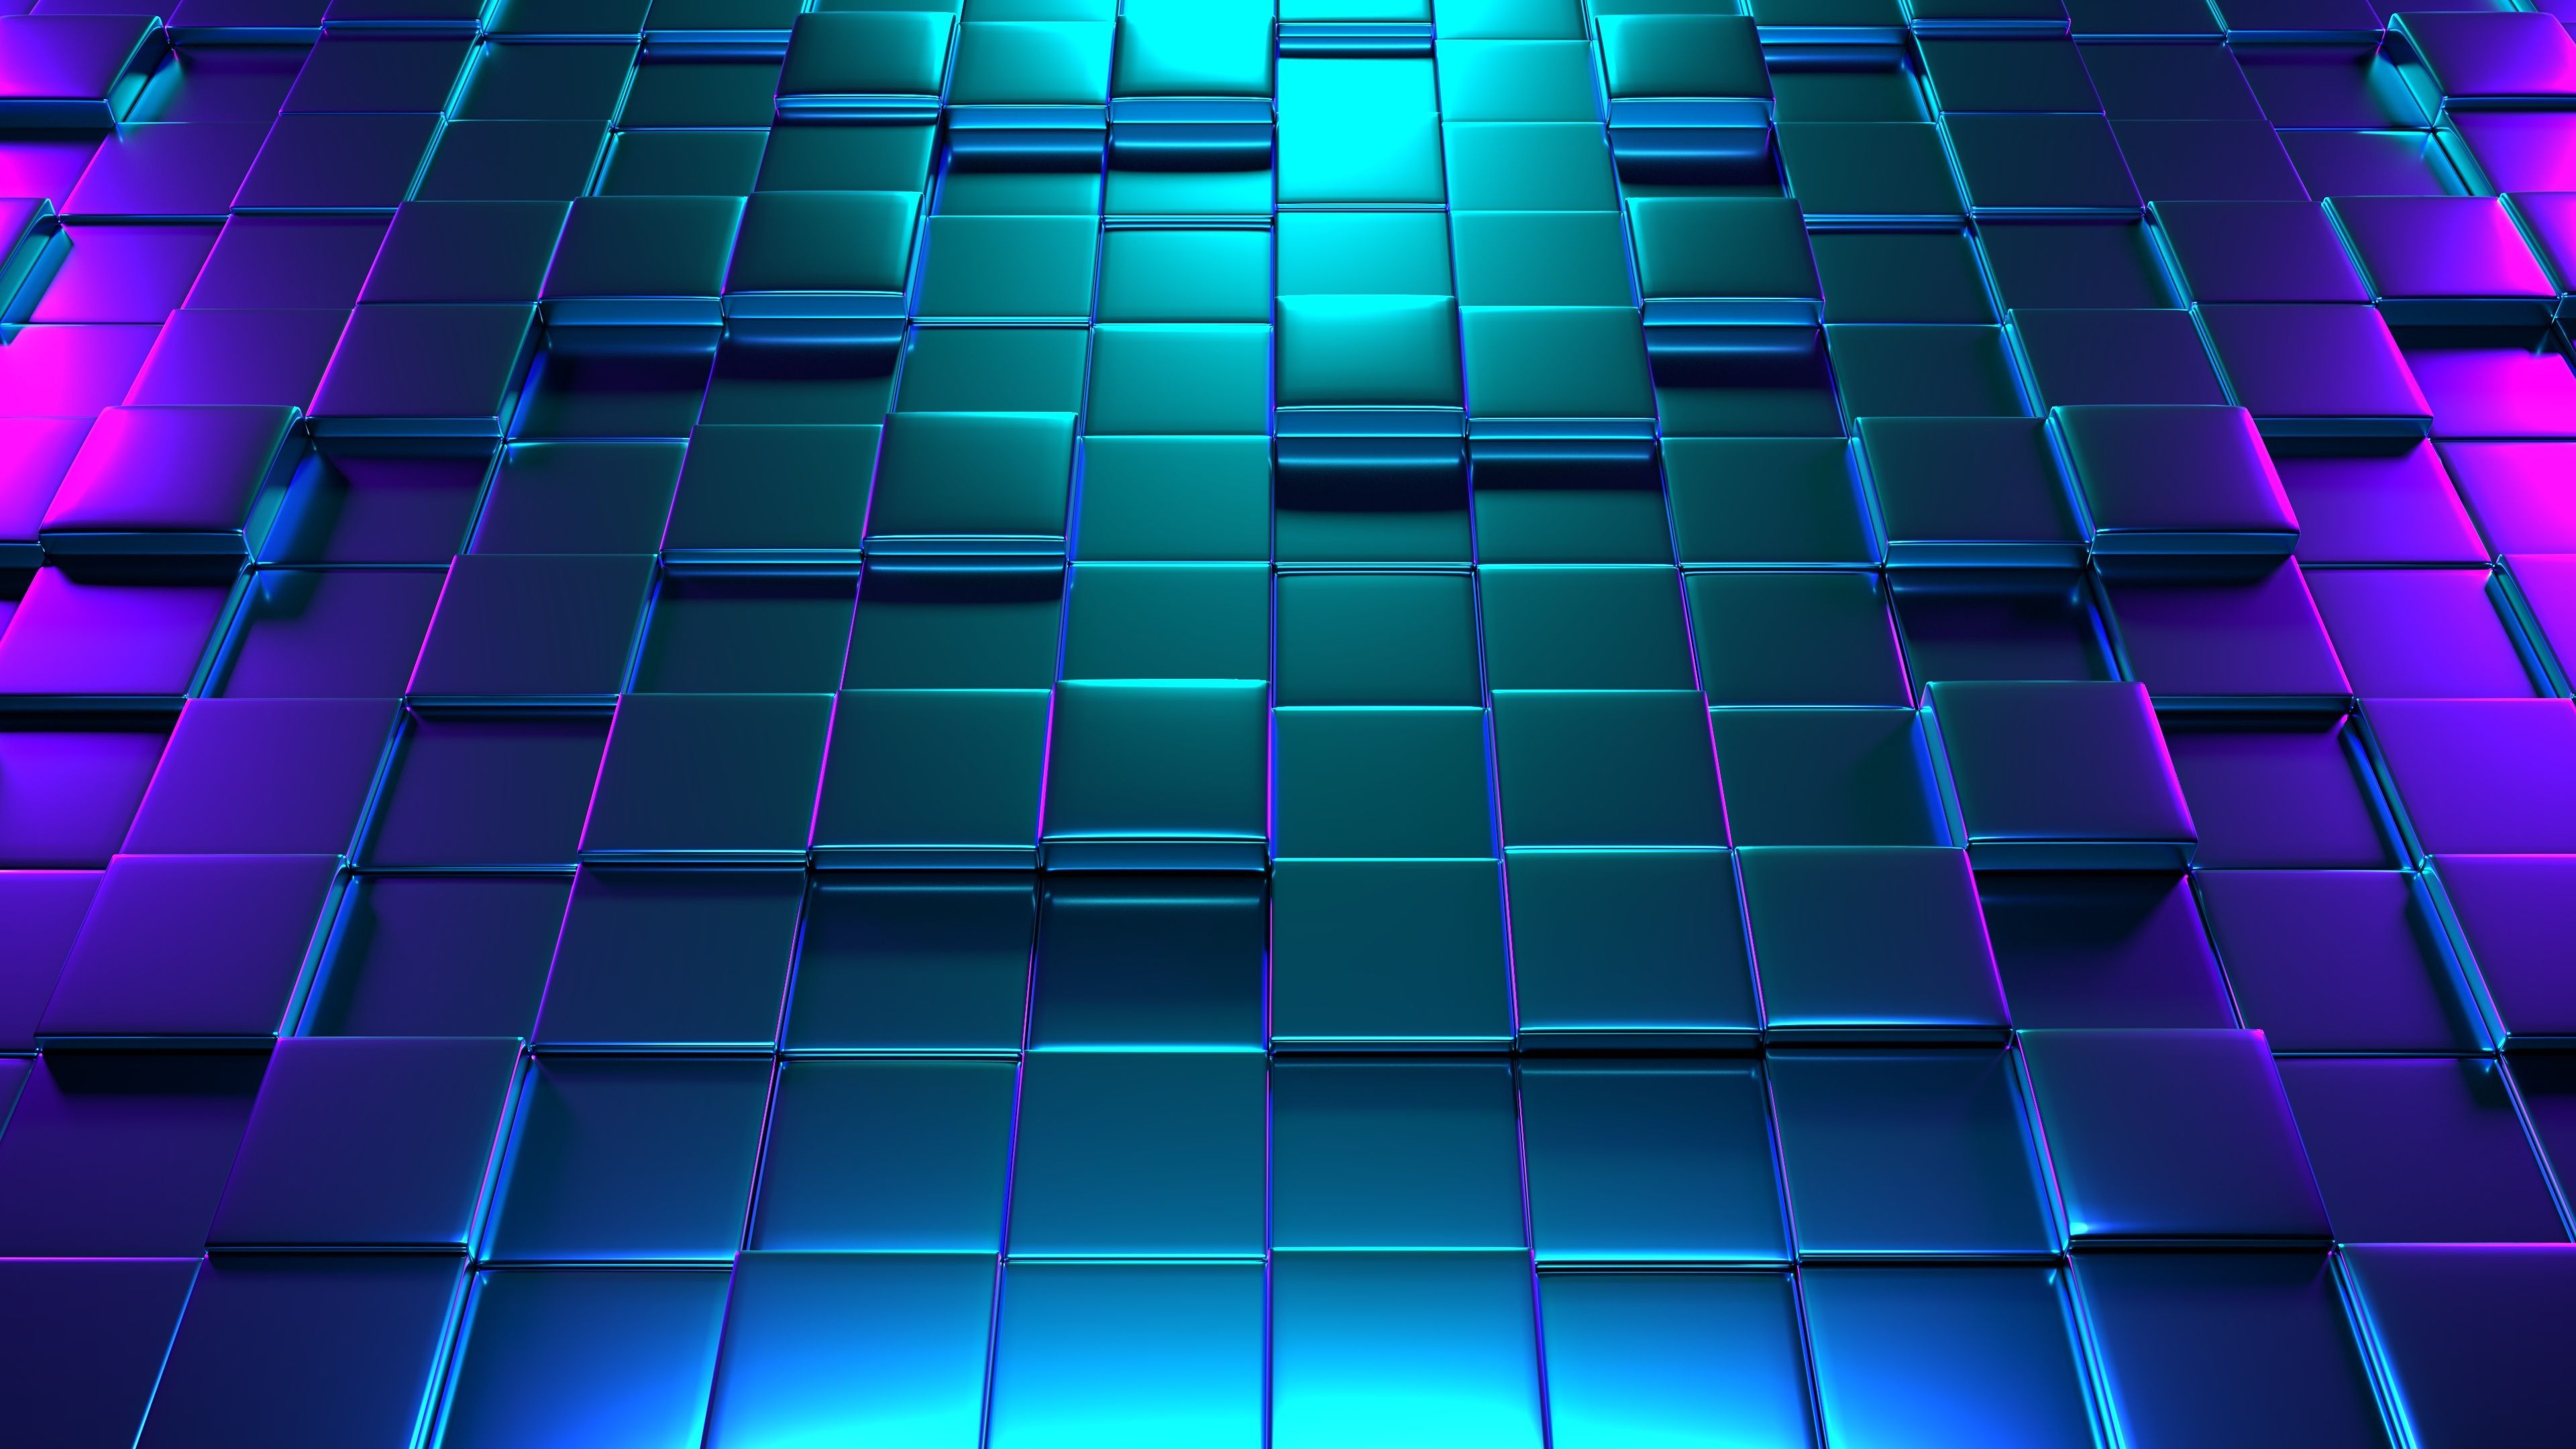 Neon 3D Cubes 4K. Wallpaper iphone .com